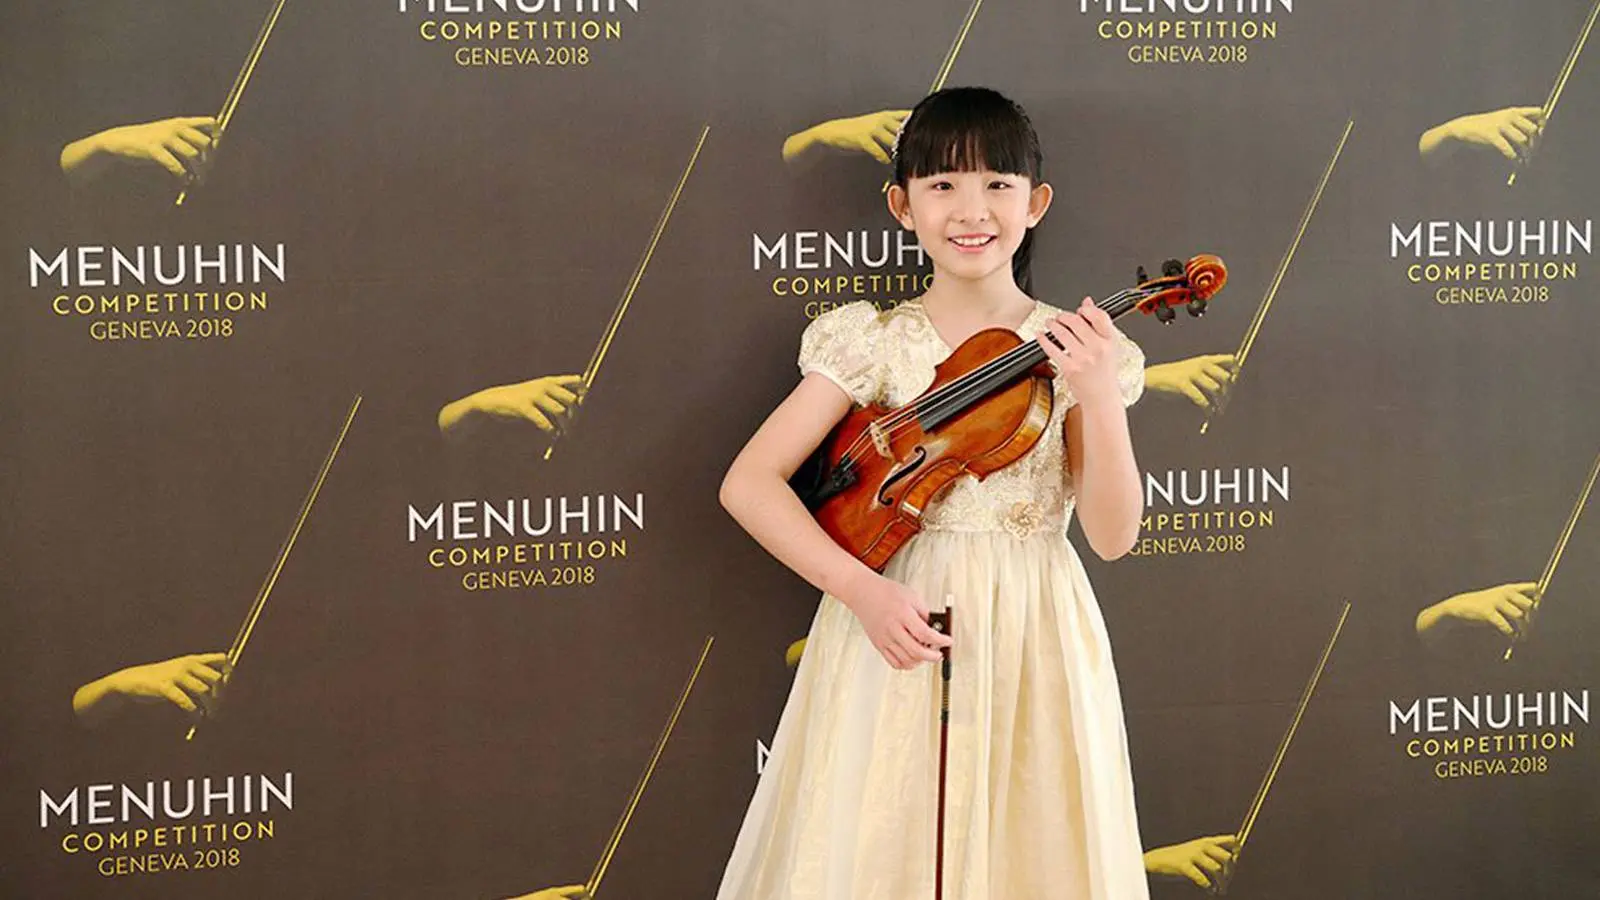 chloe chua violin primary school - What song did Chloe Chua play at Menuhin competition